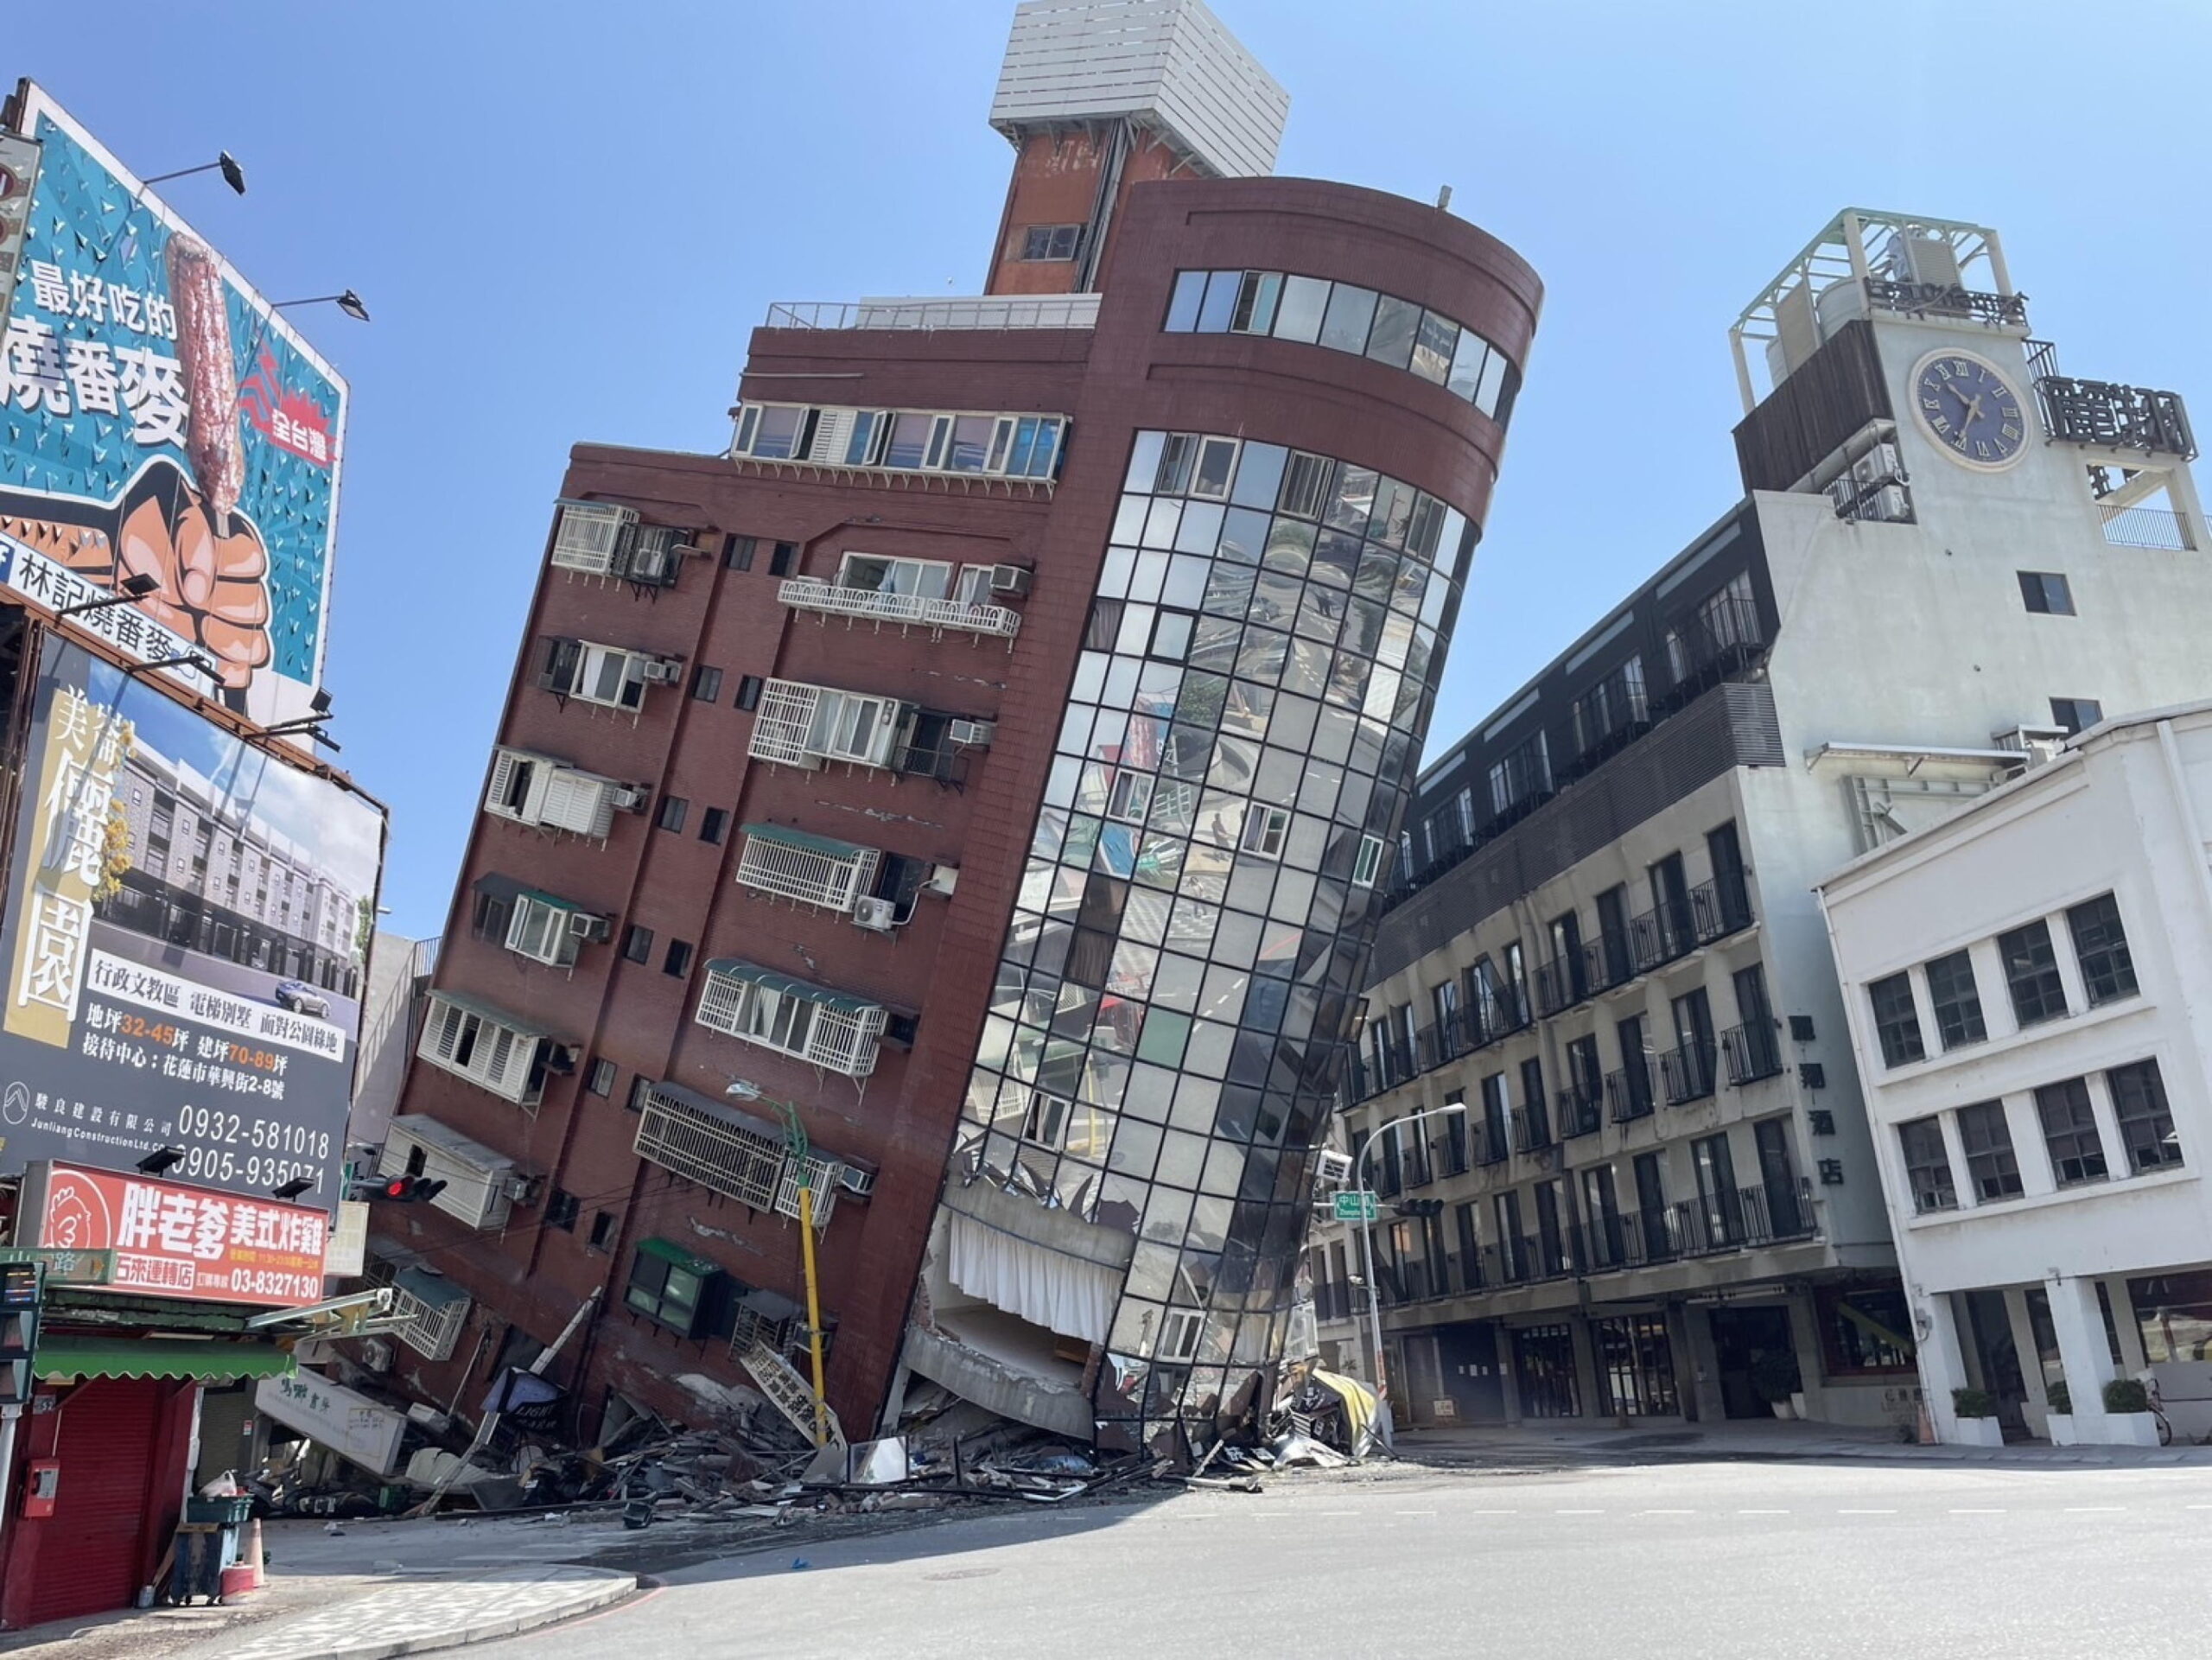 Borsa Taiwan: -1,3% Tsmc, evacuati temporaneamente siti produttivi dopo terremoto